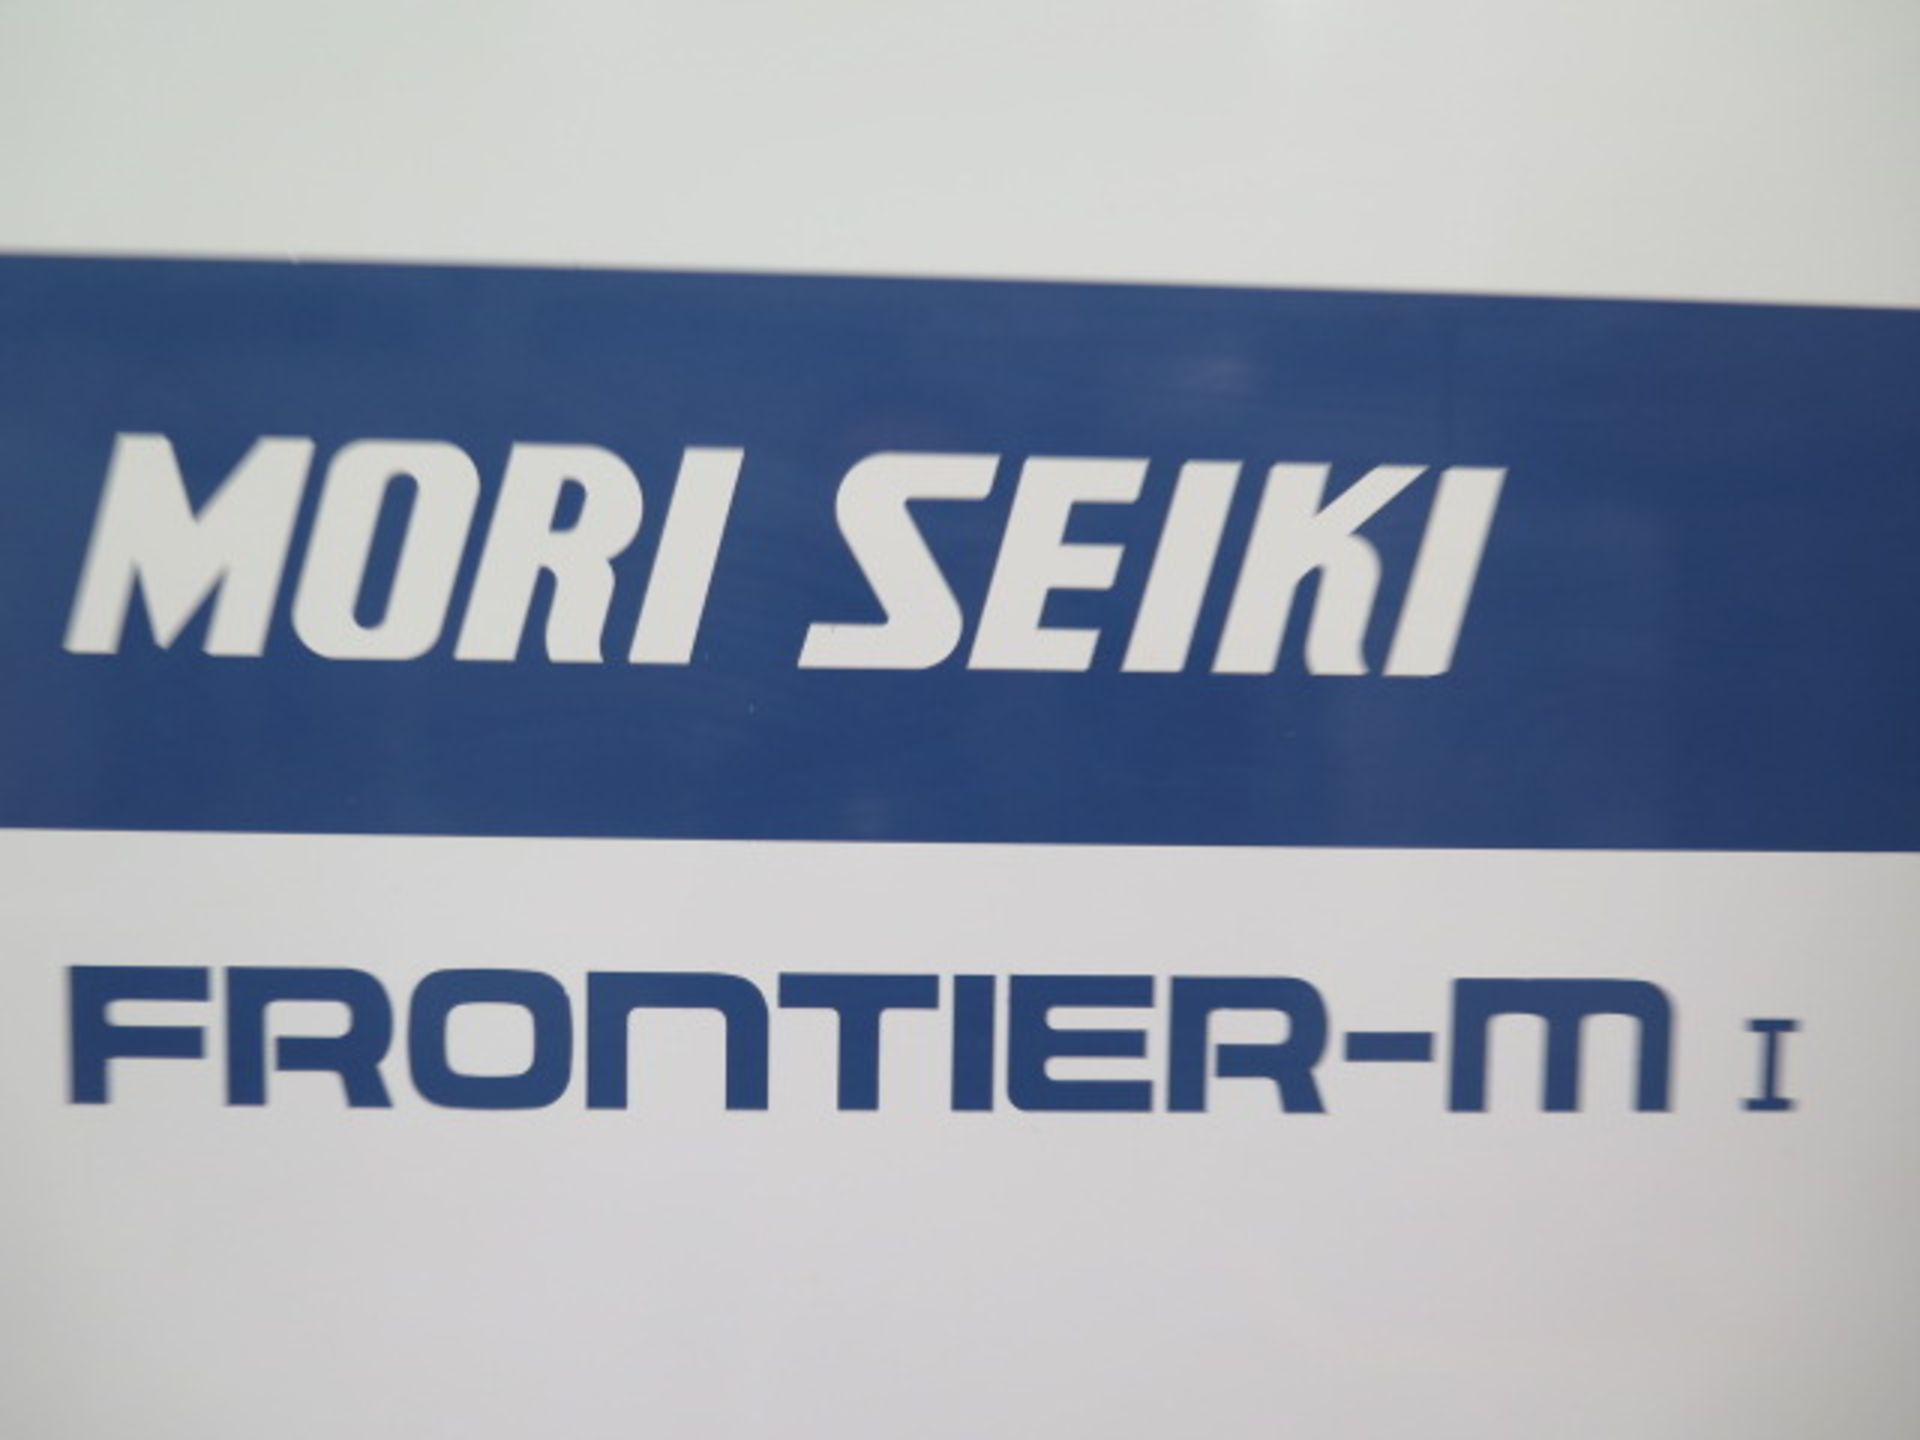 Mori Seiki Frontier-M1 CVNC VMC s/n 366 w/ Miri Seiki MSC-521 Controls, SOLD AS IS - Image 13 of 15